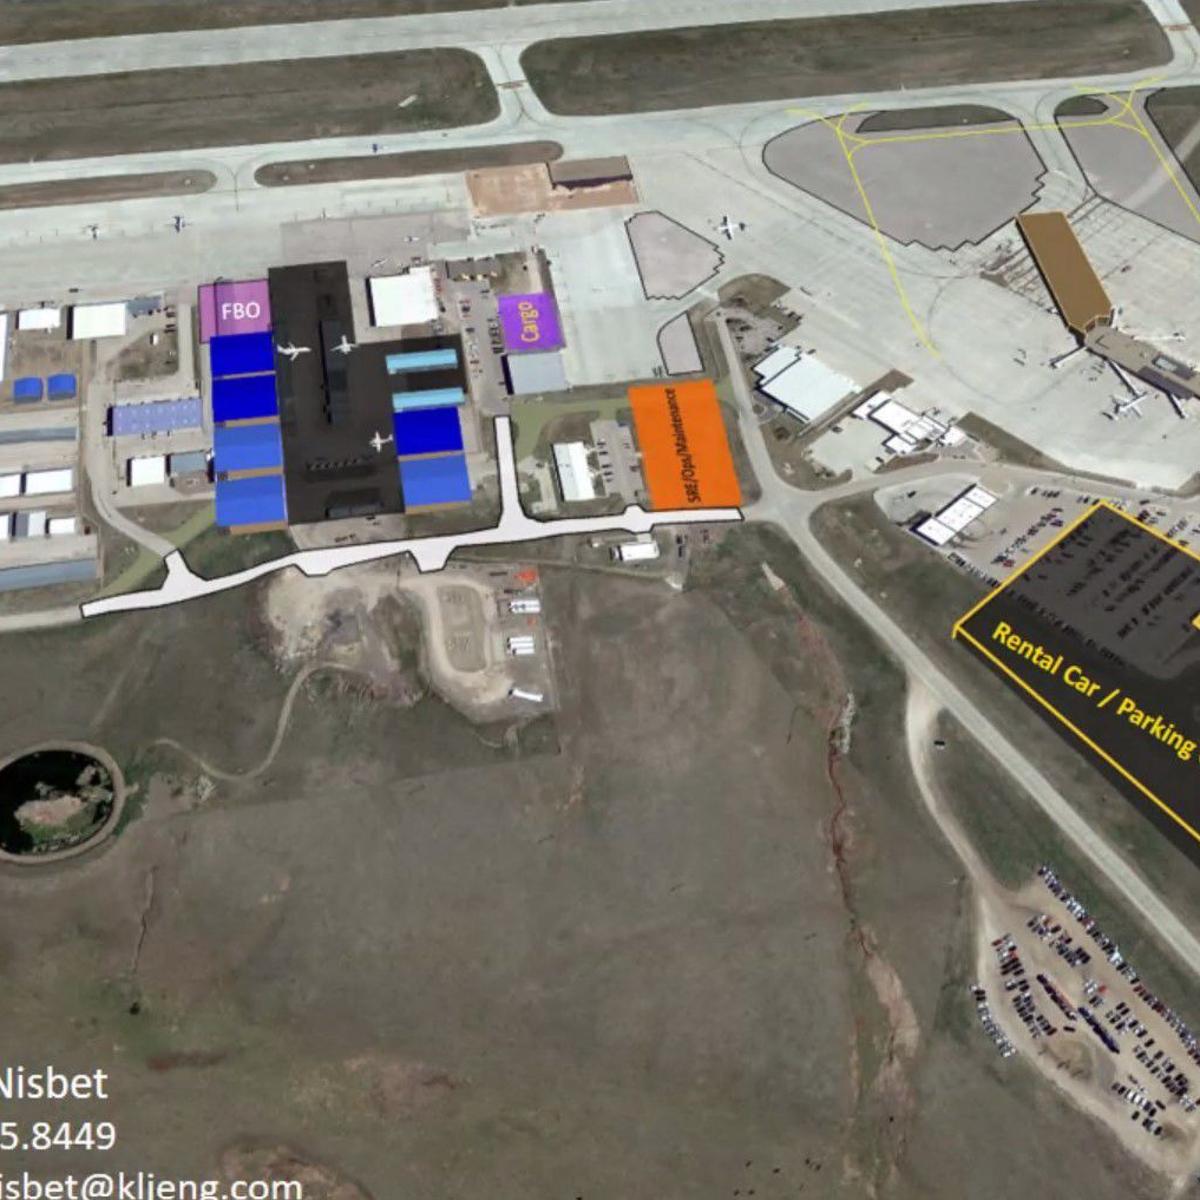 Rapid City Regional Airport Eyes Expansion Plans Local Rapidcityjournal Com